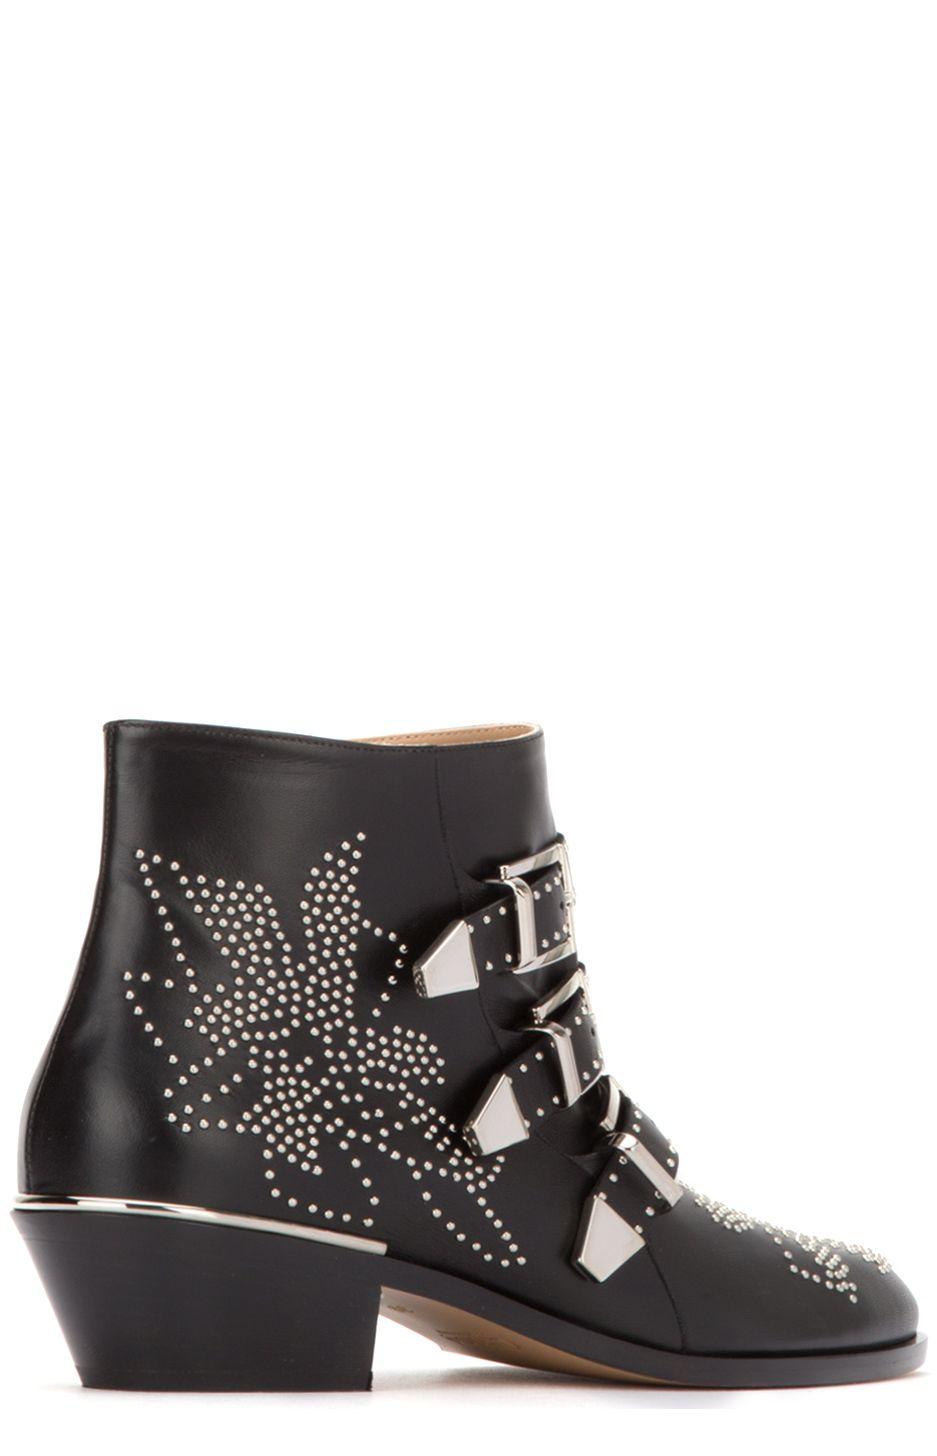 Chloé Susanna Black Leather Ankle Boots - Save 60% | Lyst